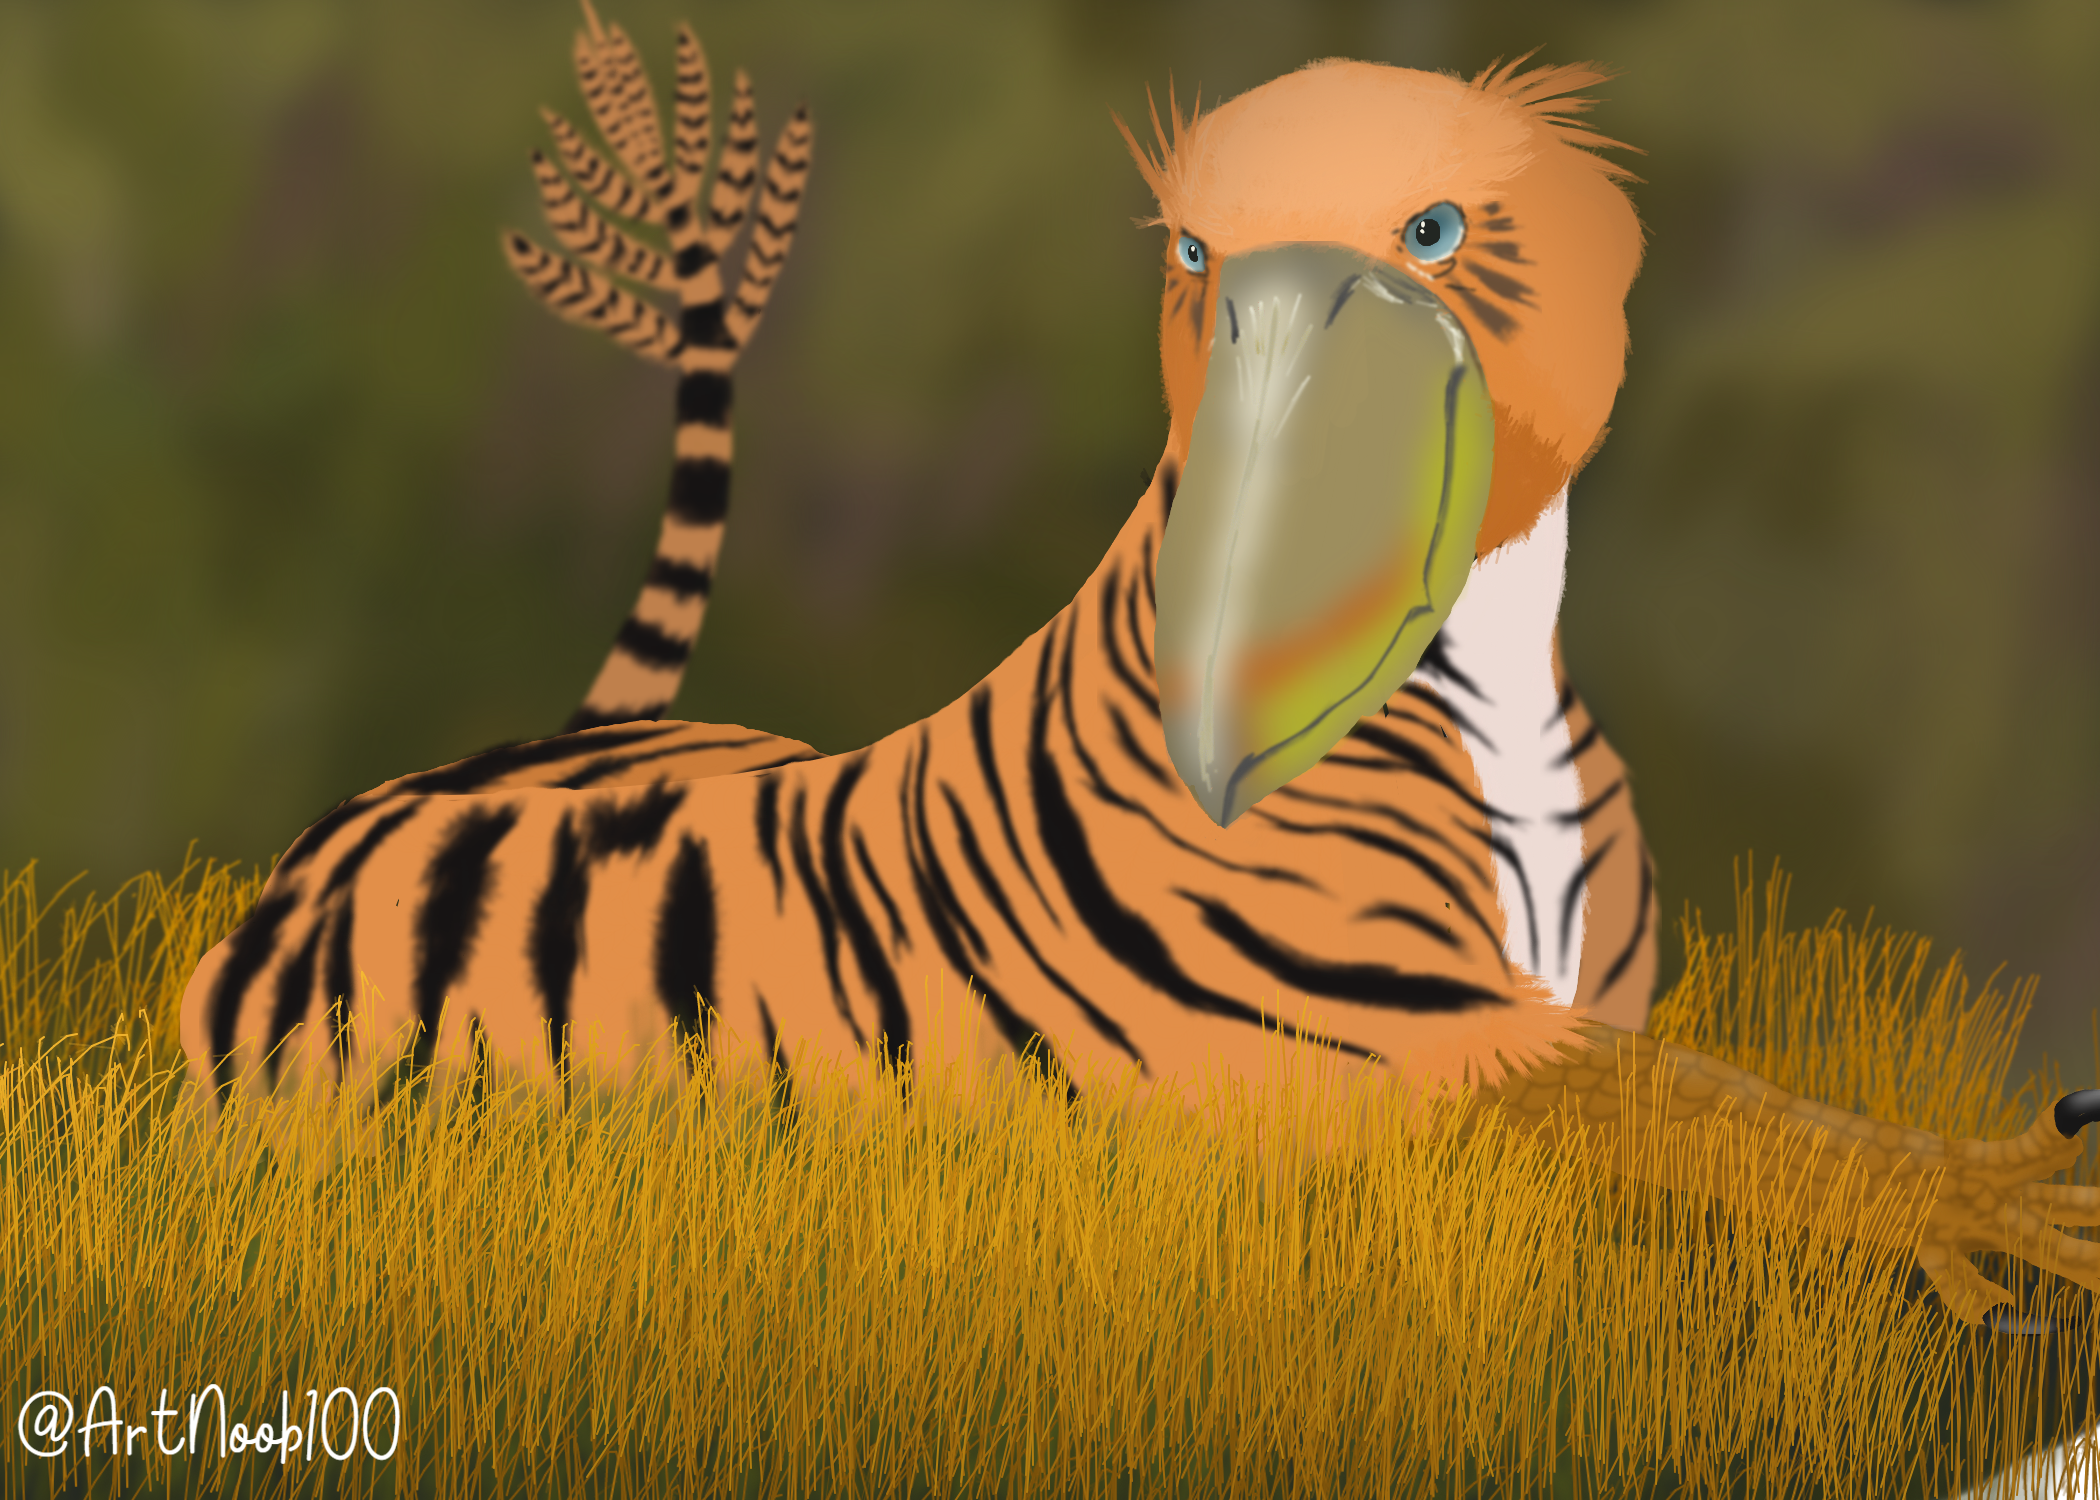 Tigerhawk - inspired by avatar hybrid animals